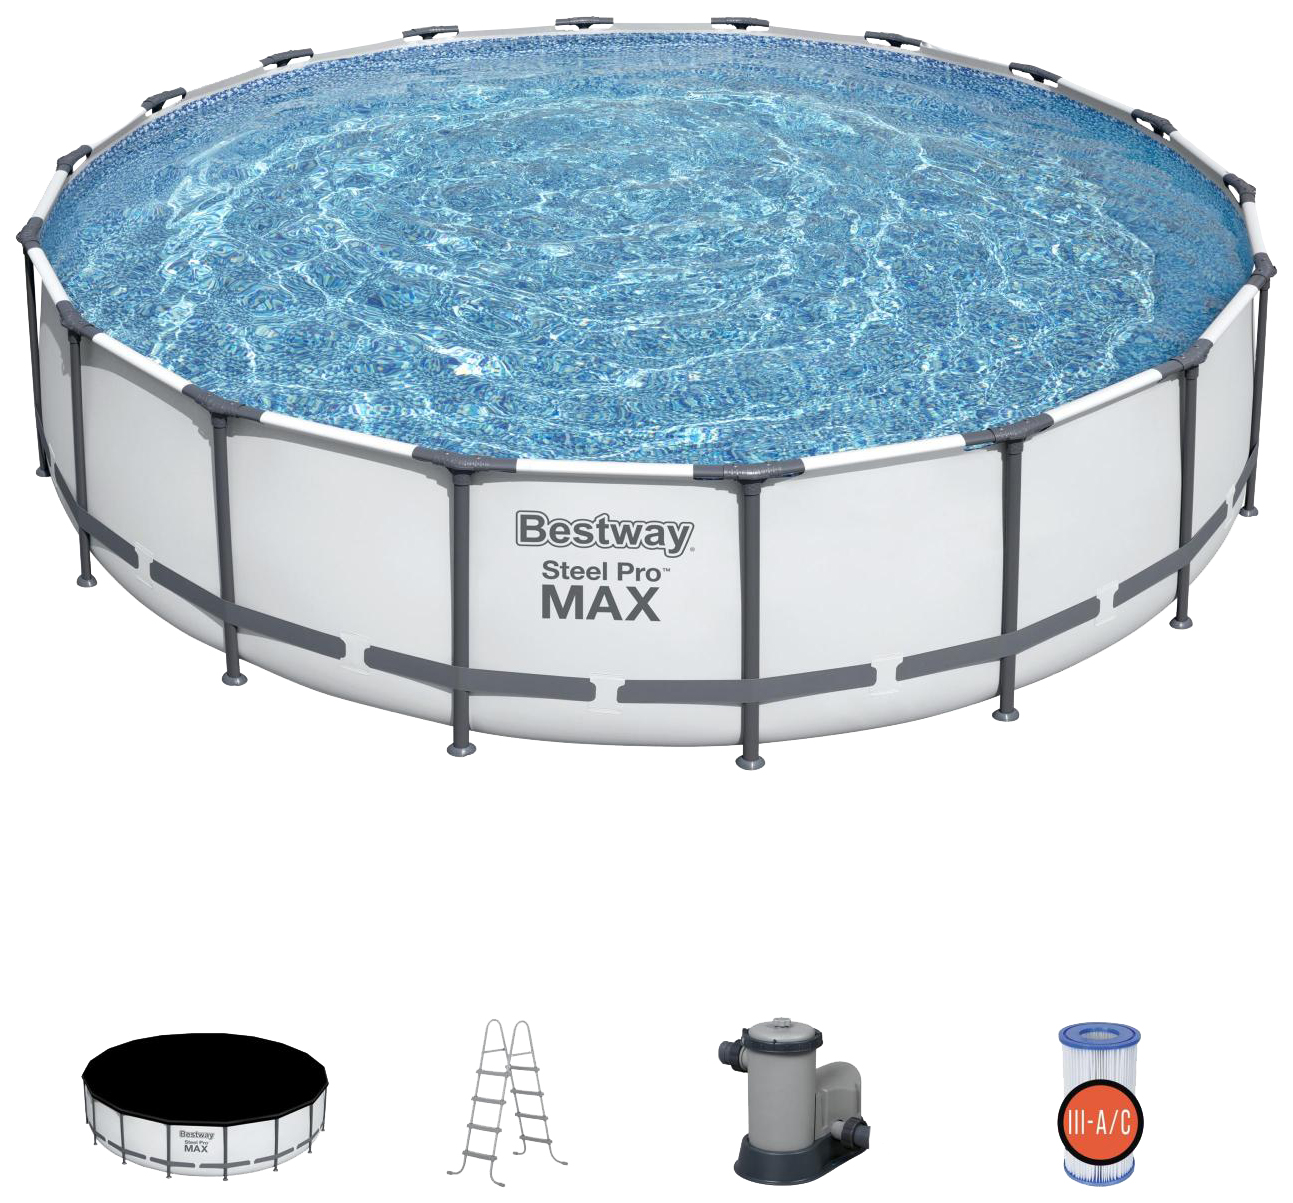 Каркасный бассейн Bestway Steel Pro Max 56950 427x427x107 см